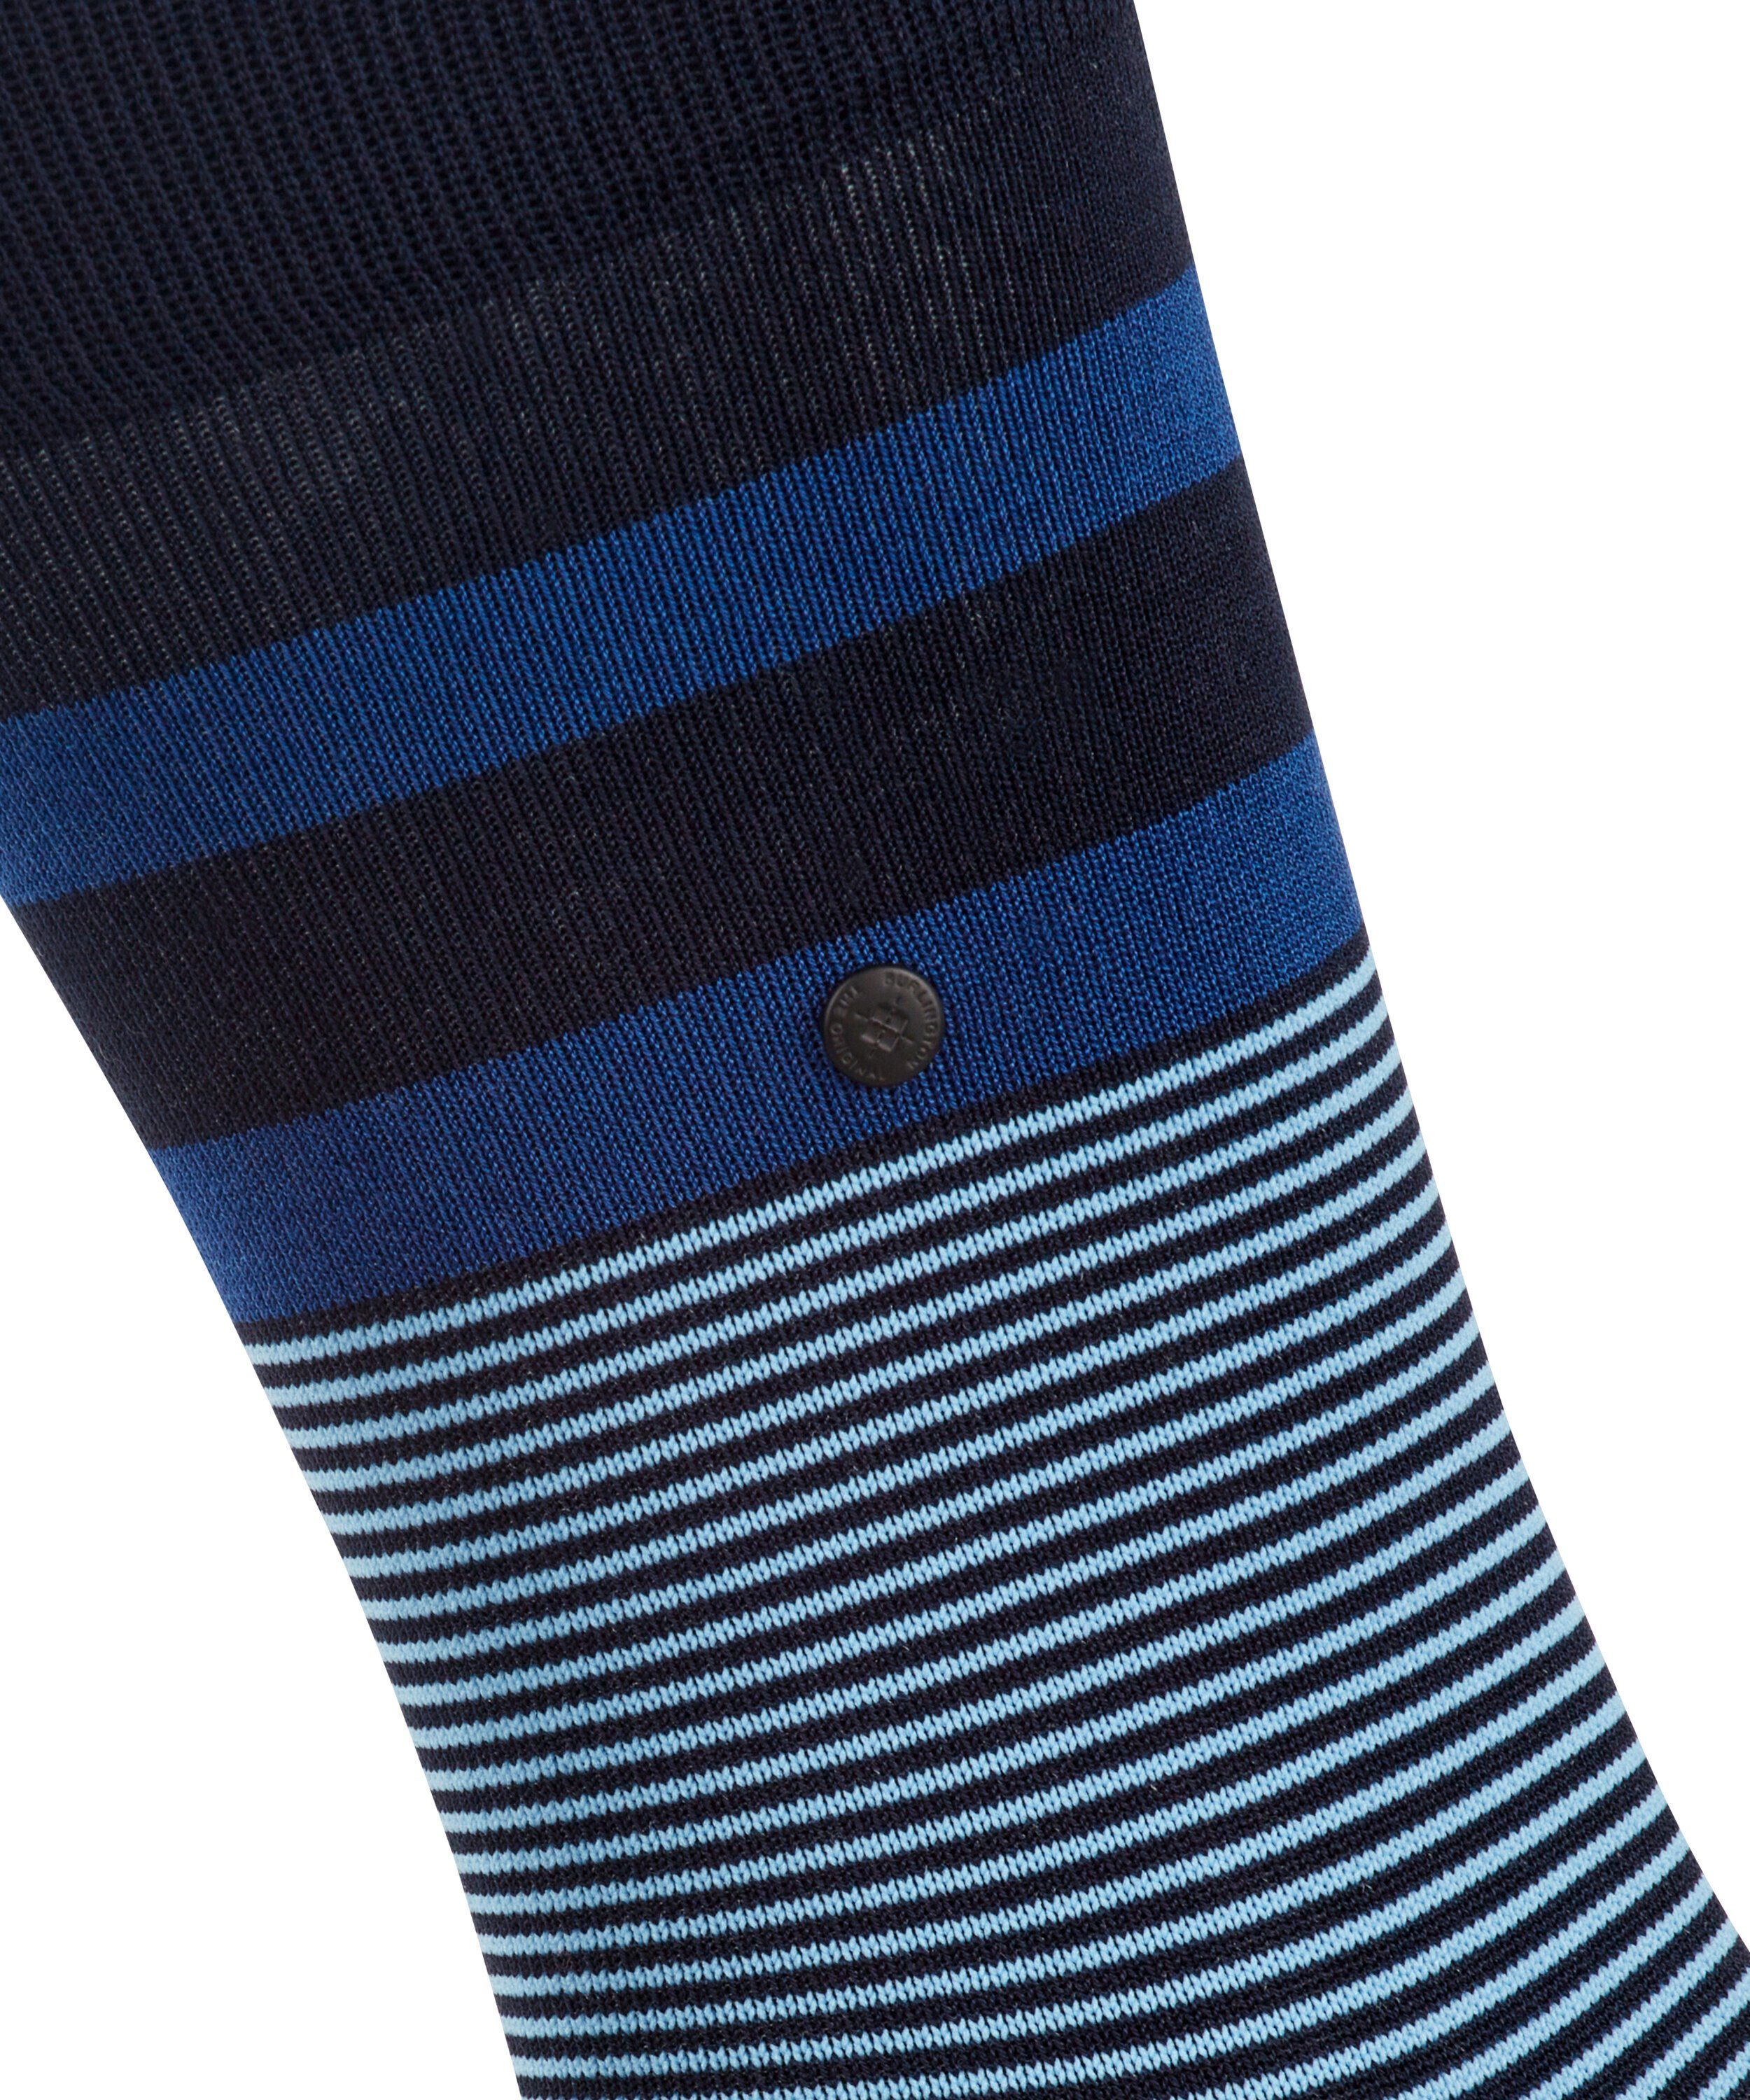 (1-Paar) Stripe Socken Black marine Burlington (6120)